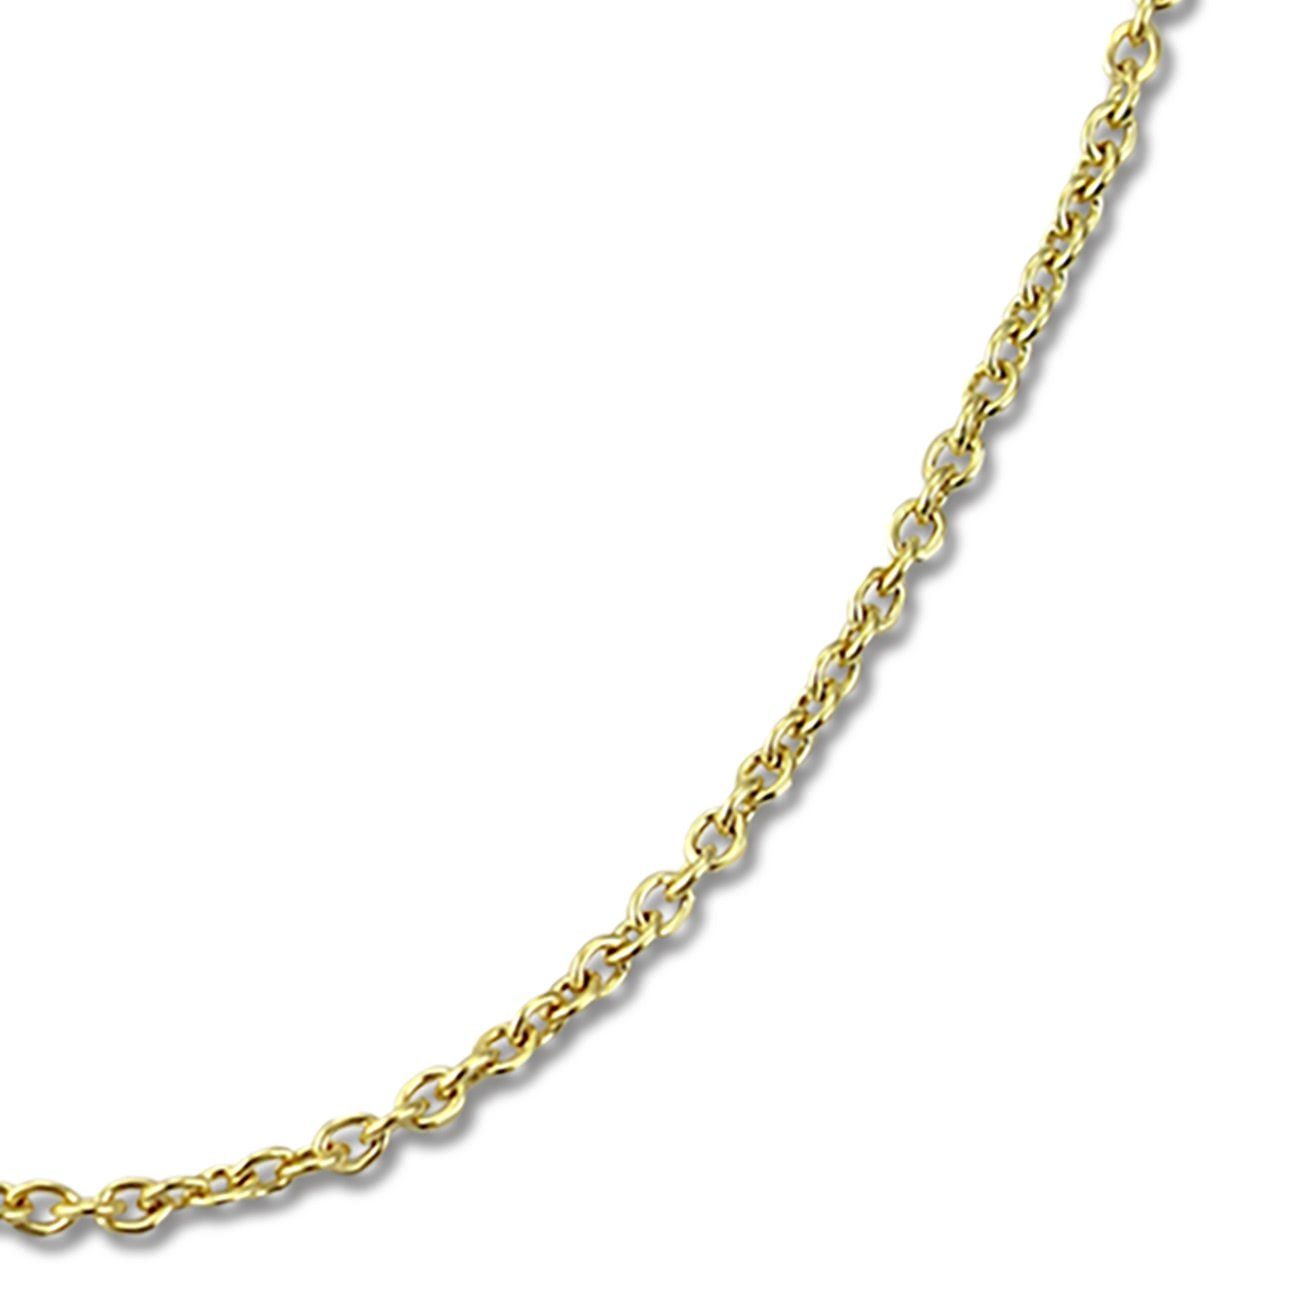 Goldkette Damen (Collier), GoldDream 55cm Halskette Karat, Colliers Colliers Farbe: Halskette GoldDream - Damen 55cm, 8 333 goldfarb Gelbgold